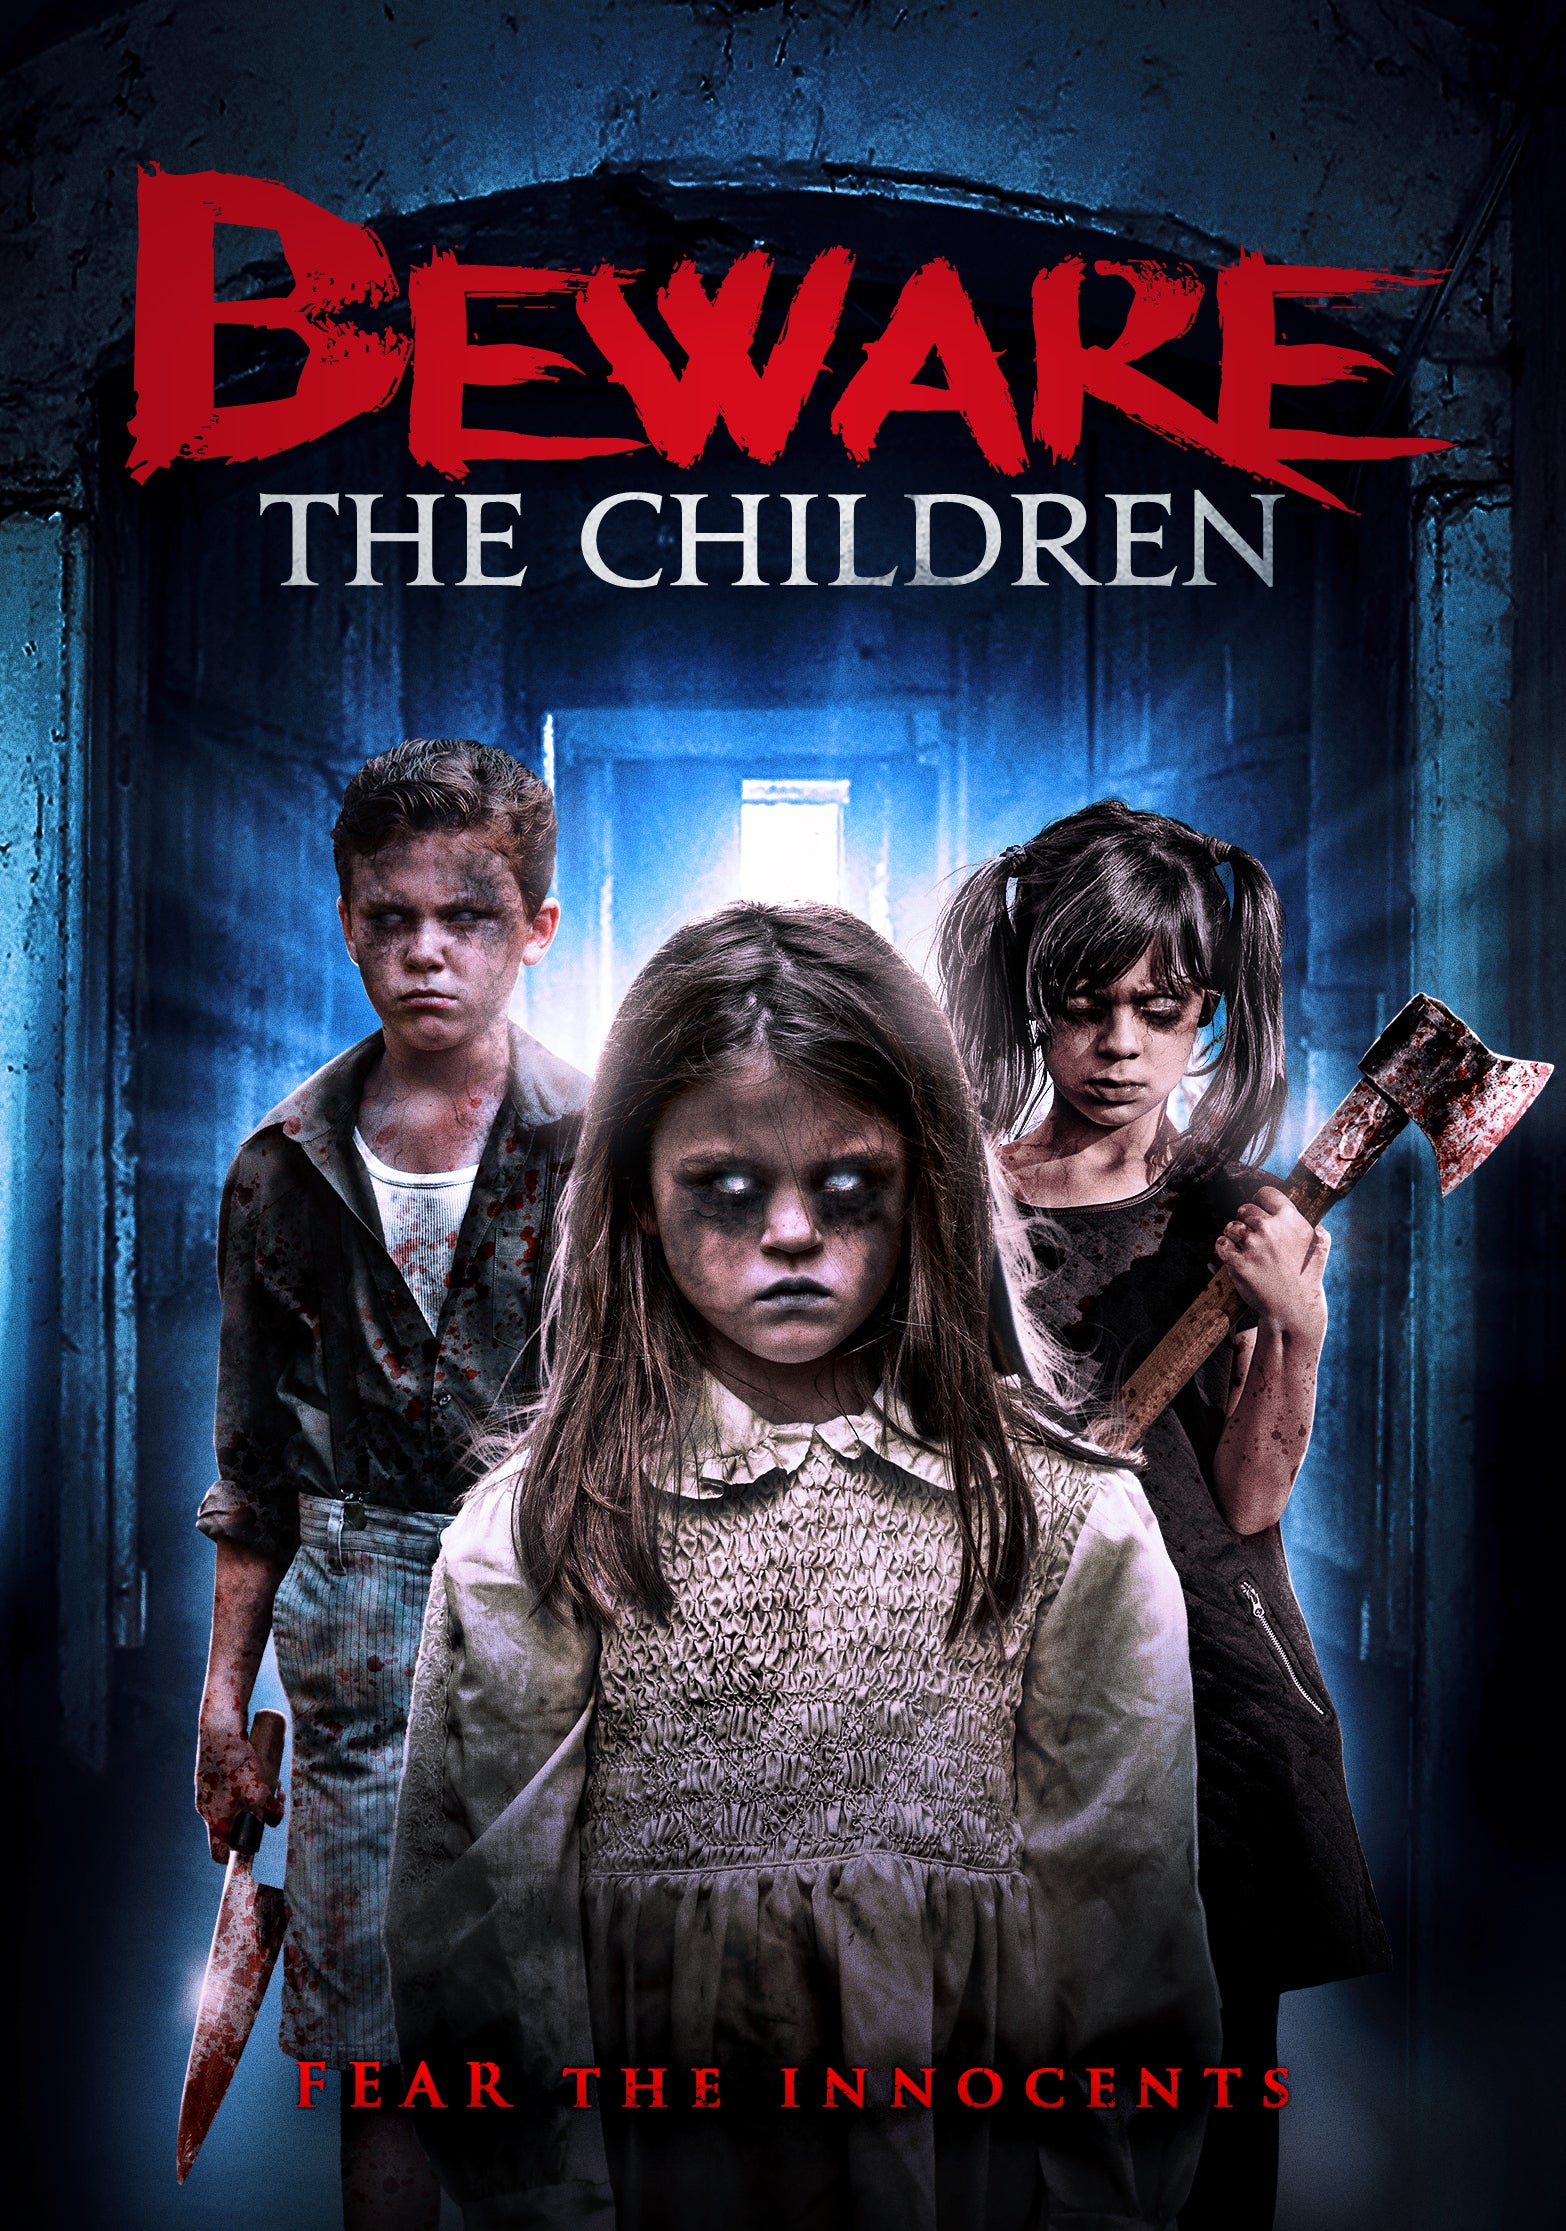 BEWARE THE CHILDREN DVD